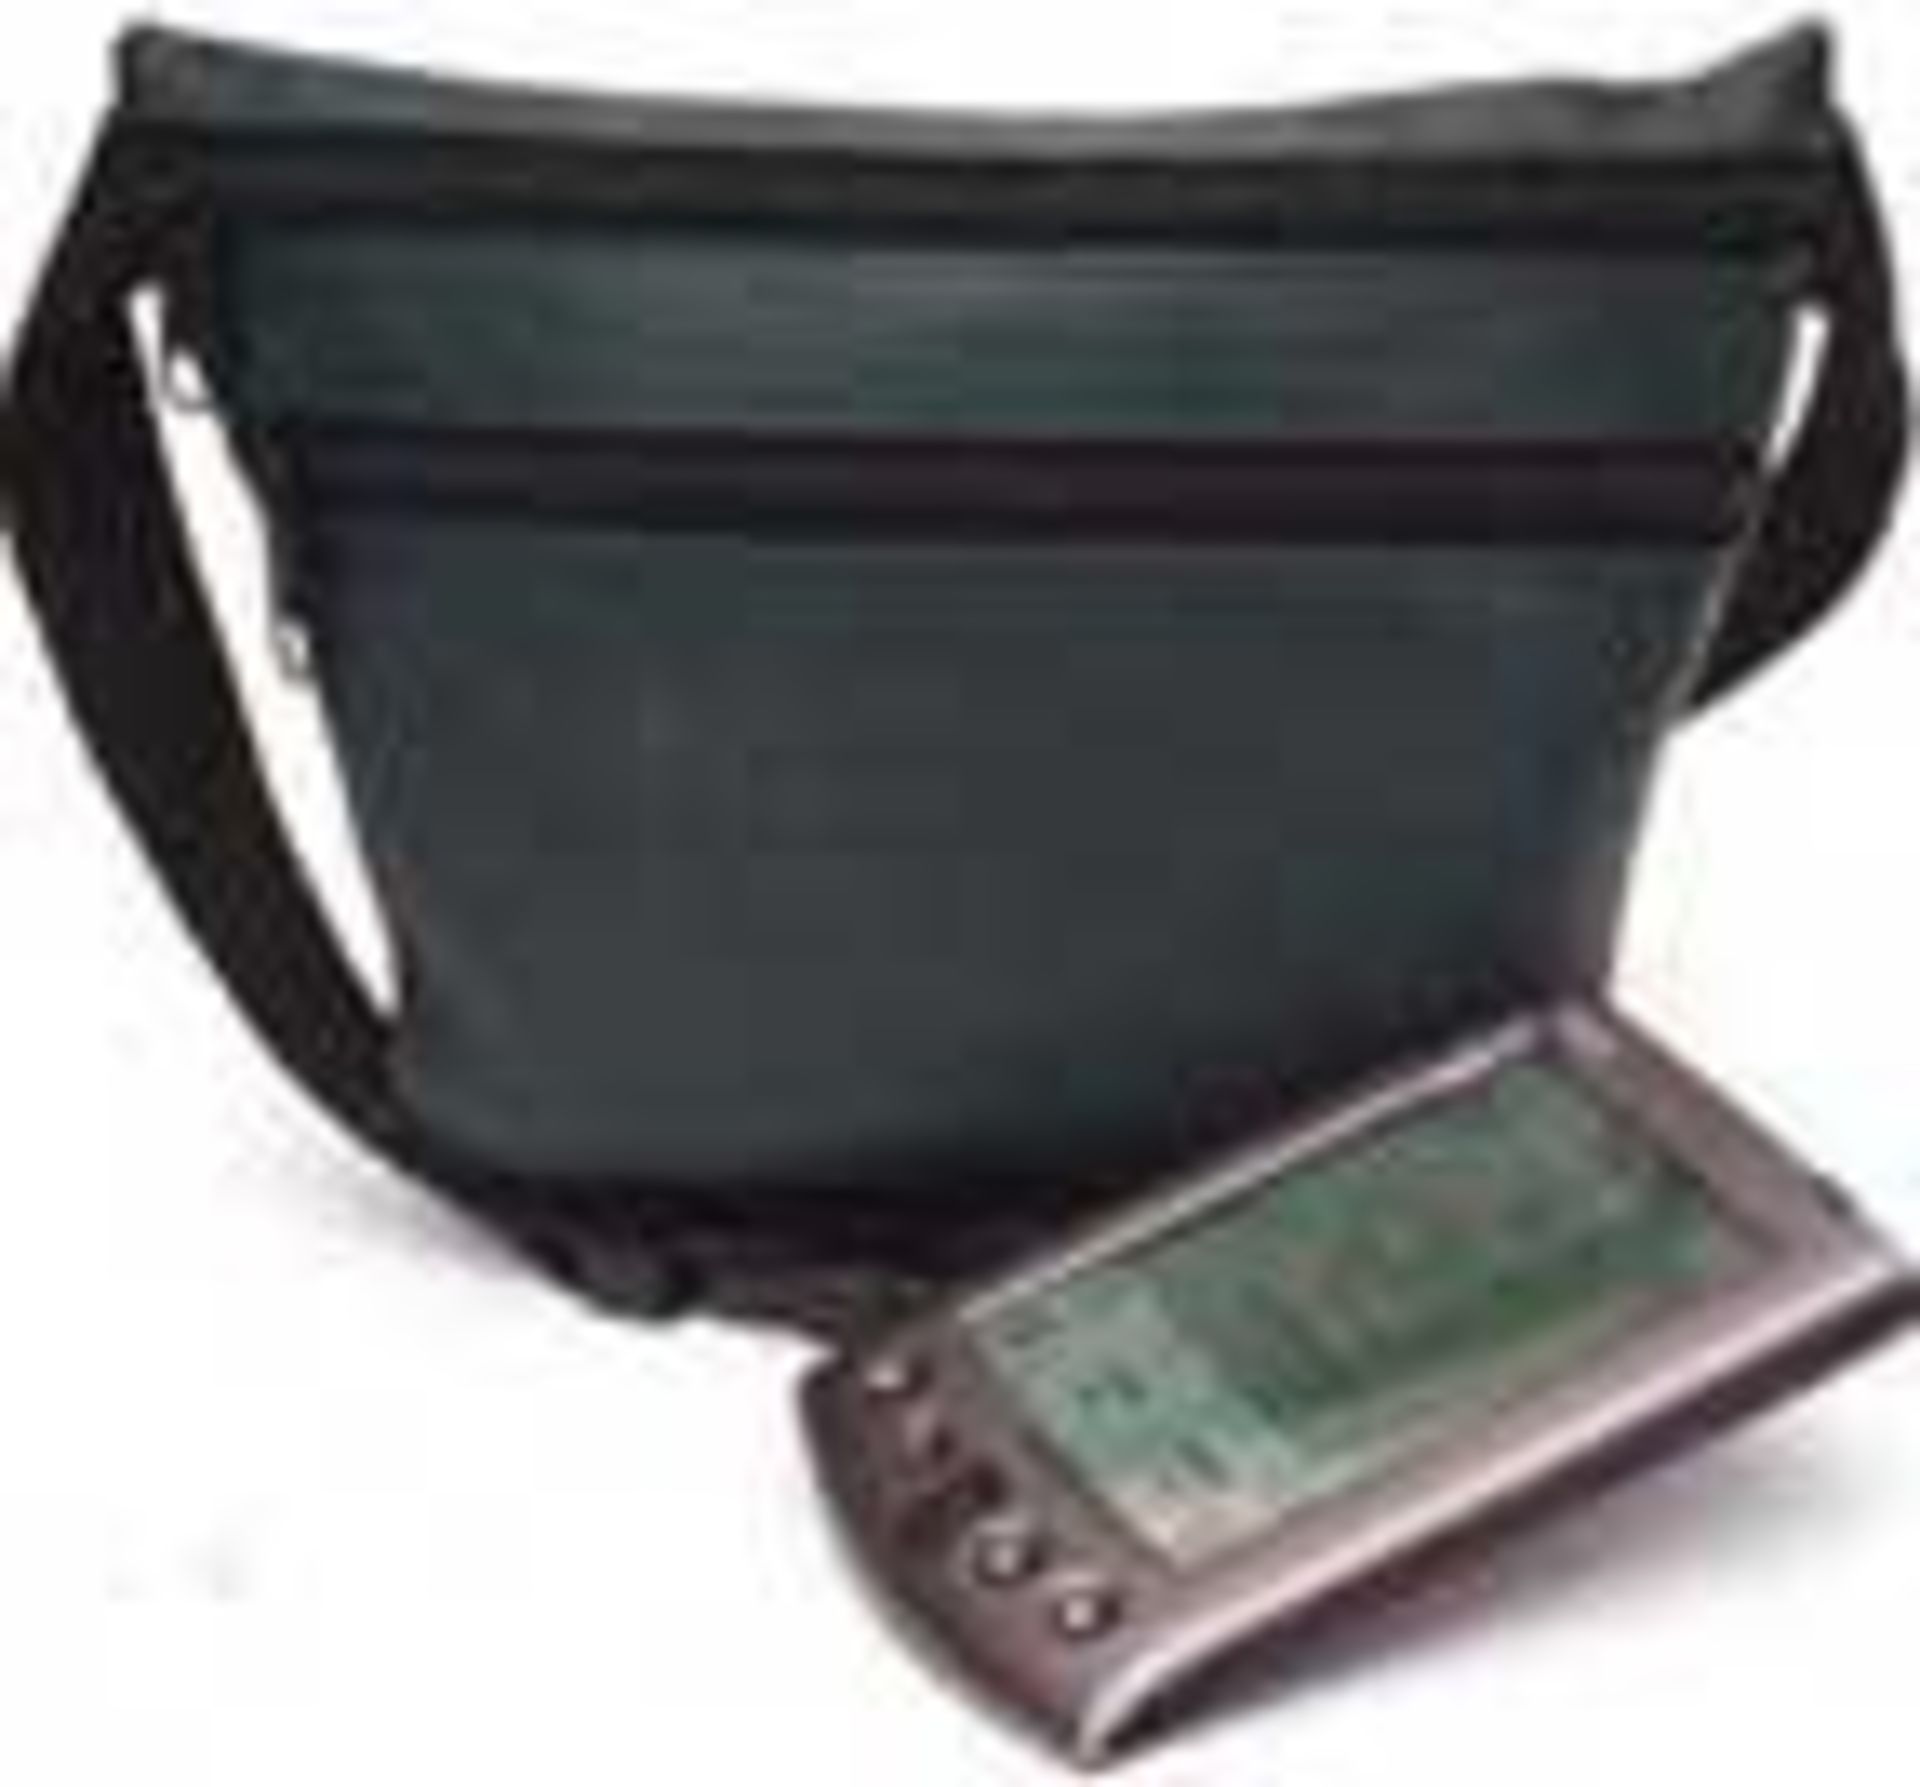 (40) Soft, top grain leather, slim waistpack for passport, money, etc. 2 front zippers. Flat